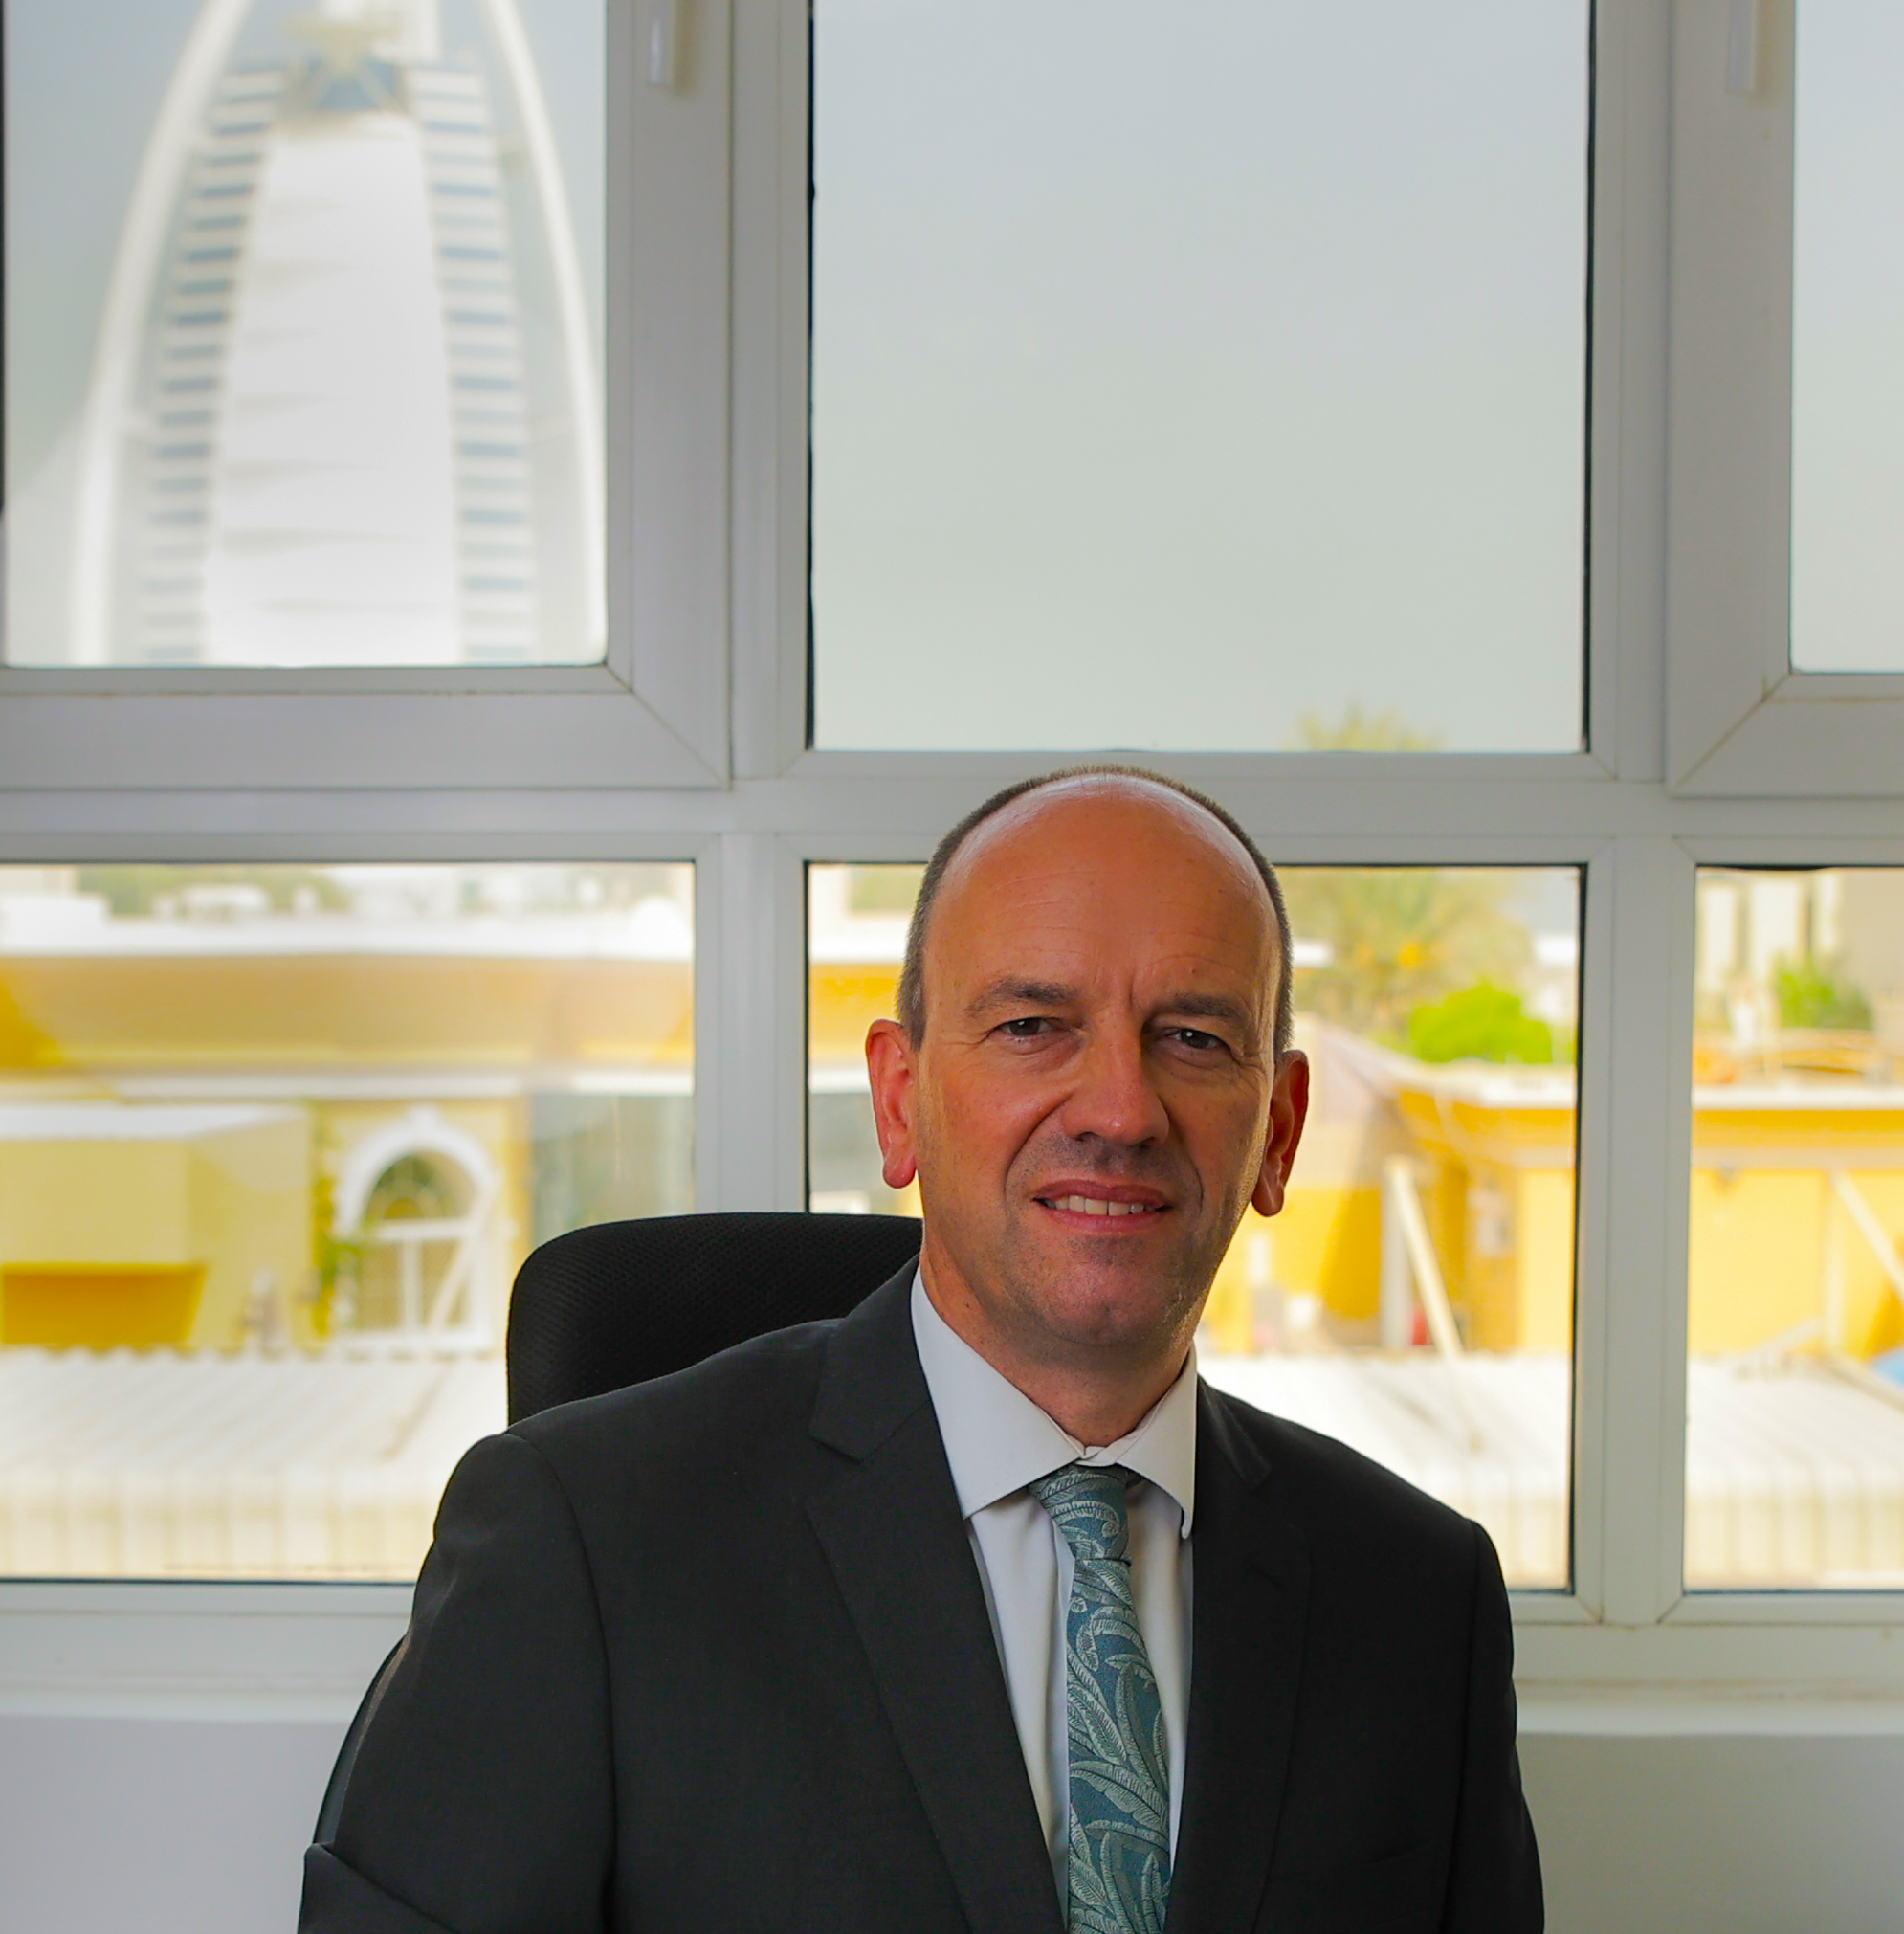 Photograph of Steven Giles, Principal of Raffles International School in Dubai